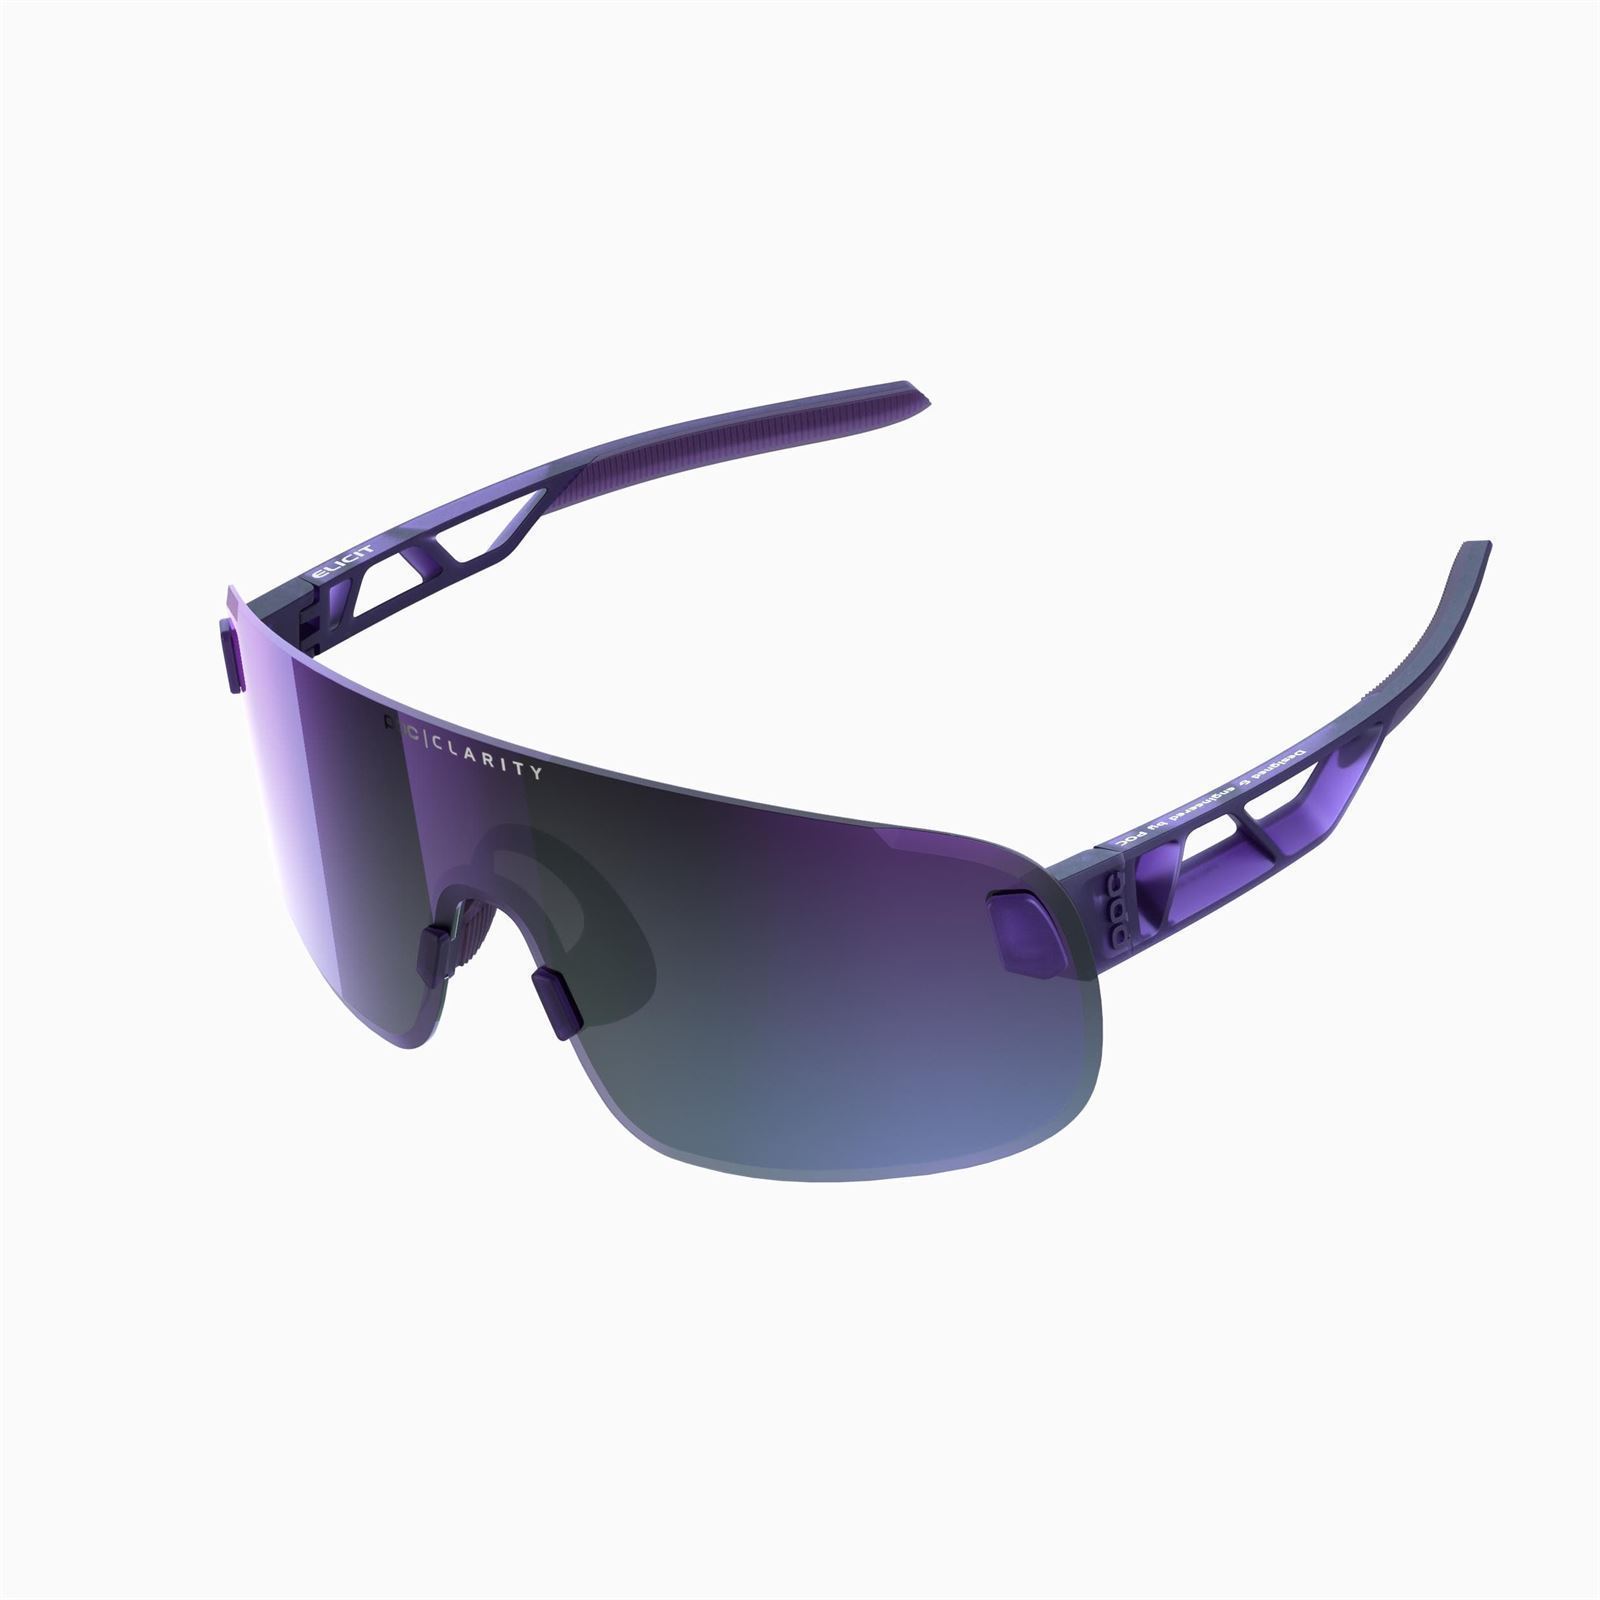 Gafas POC ELICIT "Sapphire Purple Translucent / Lente: Clarity Define Violet Mirror" - SUPER PRECIO BLACK FRIDAY!!!! - Imagen 1